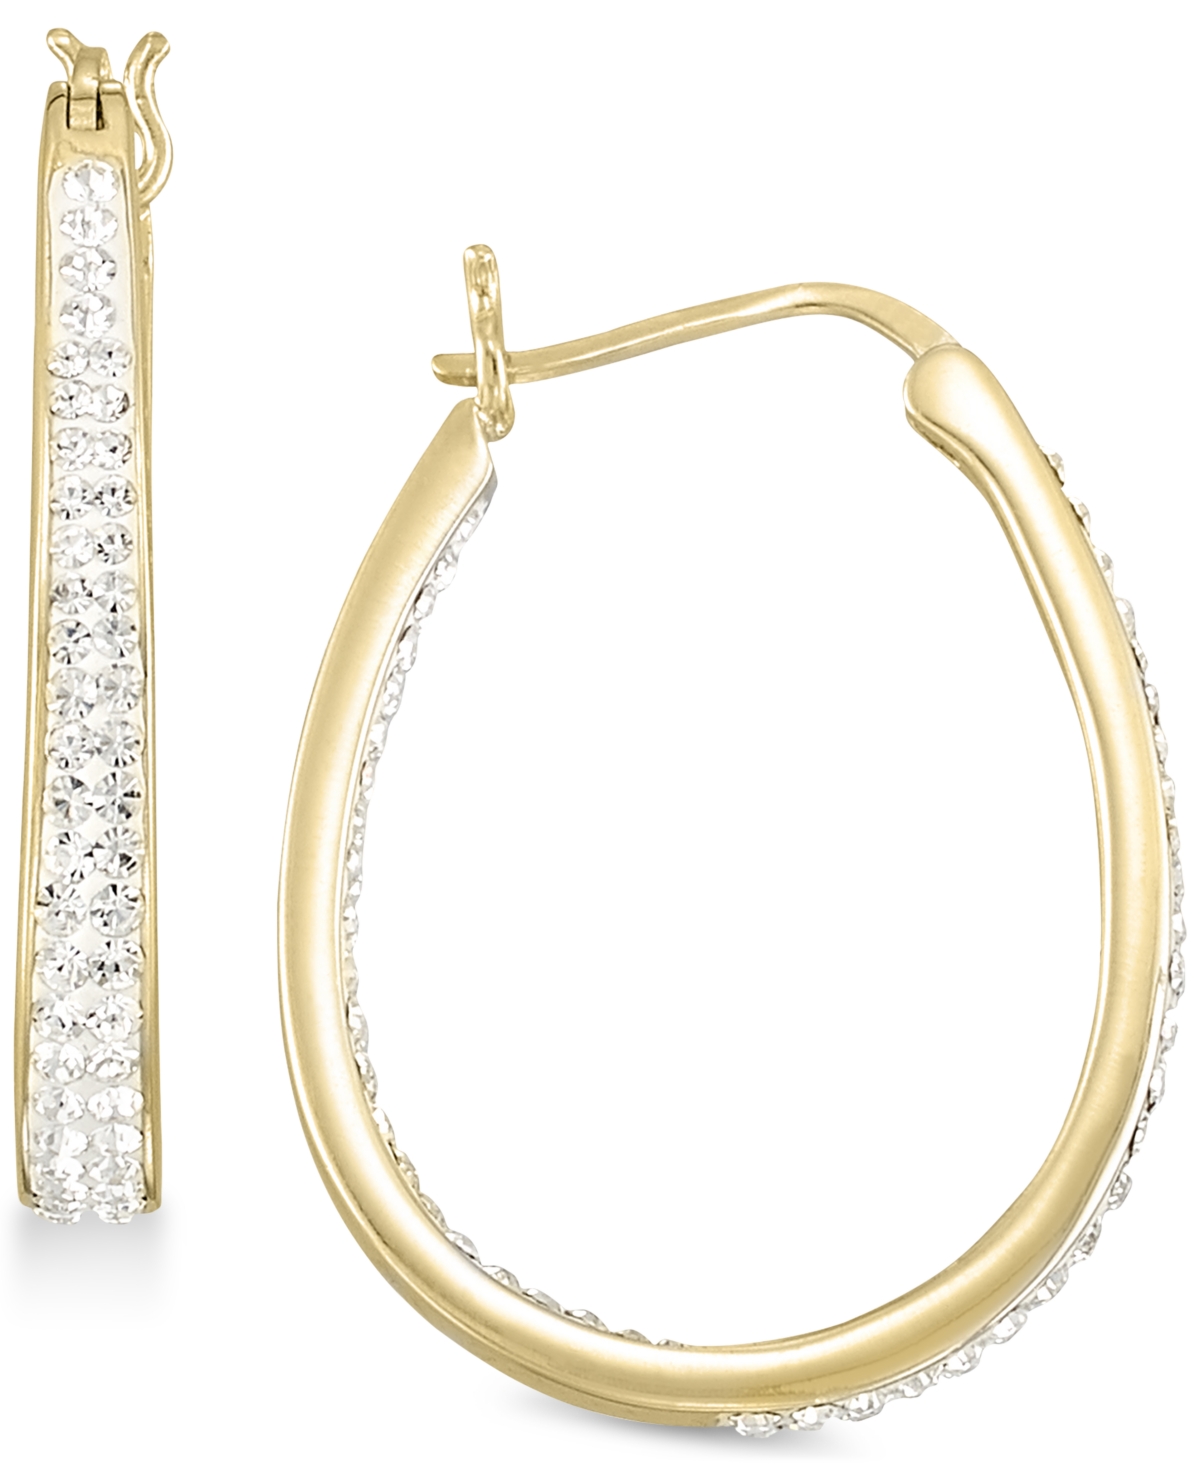 Crystal Oval Hoop Earrings in 18K Yellow Gold Over Silver or Sterling Silver - Gold over Silver